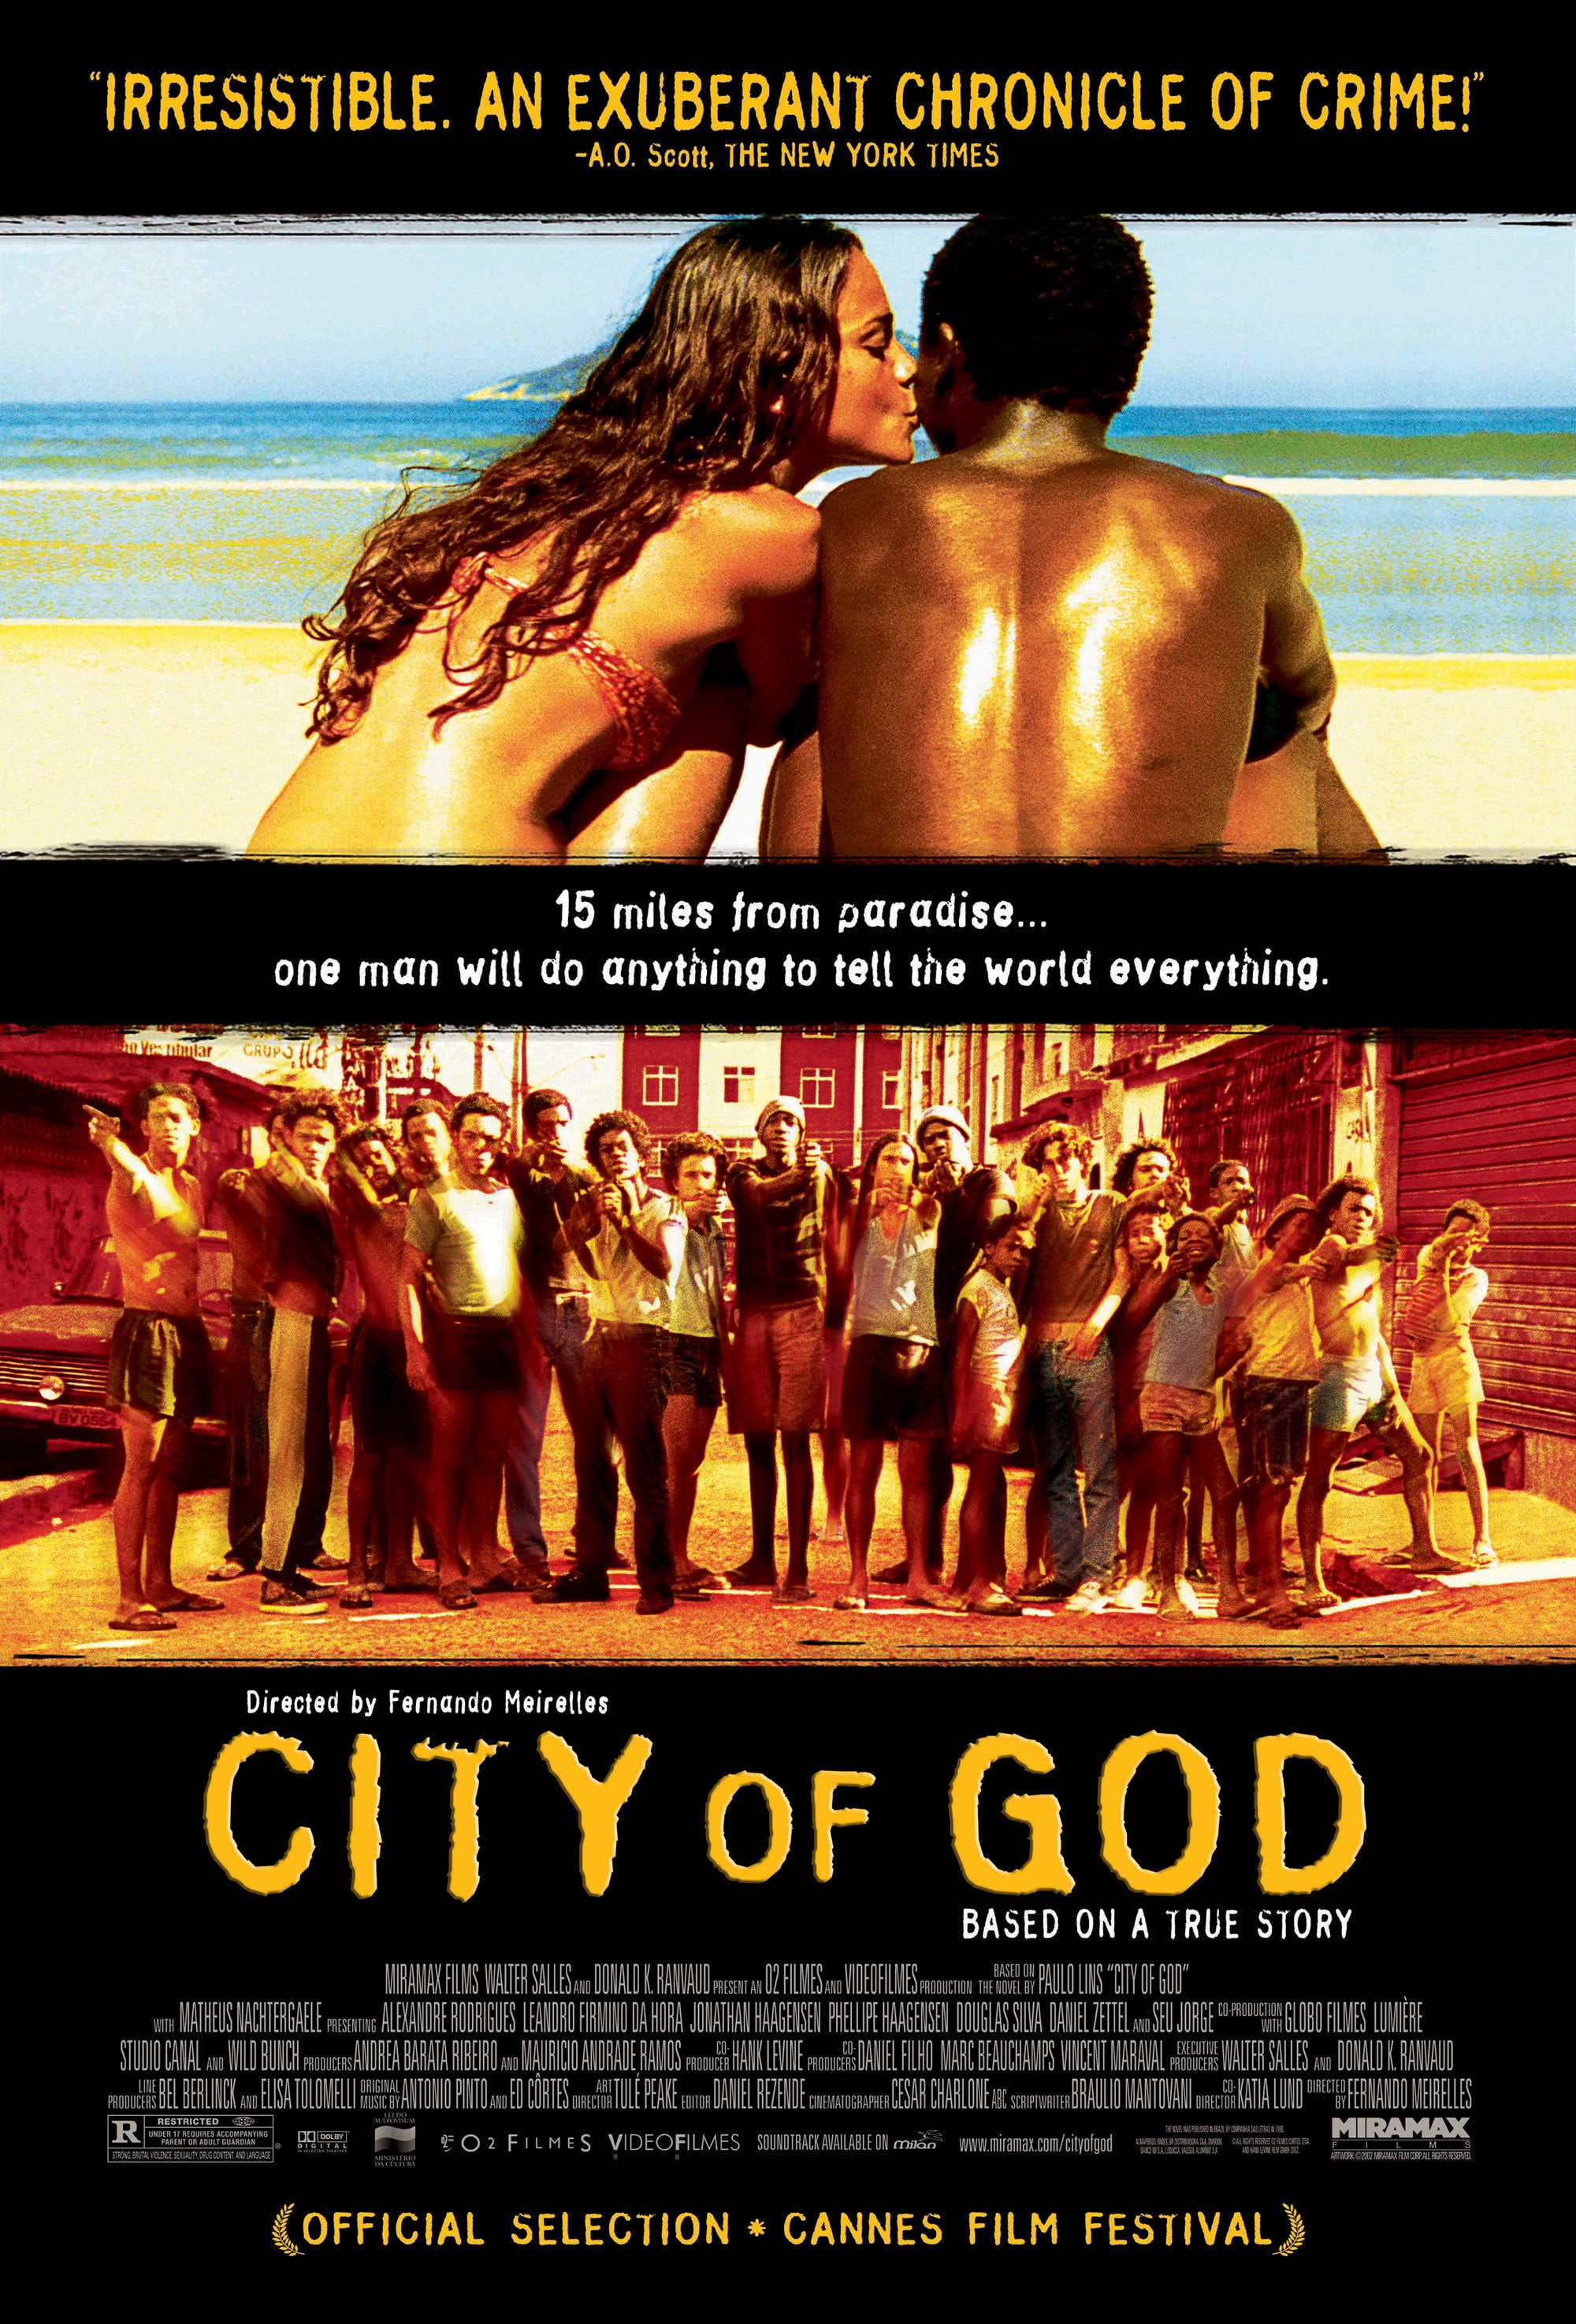 Stiahni si HD Filmy Mesto Bohu / City of God (2002)(CZ)(1080p) = CSFD 89%